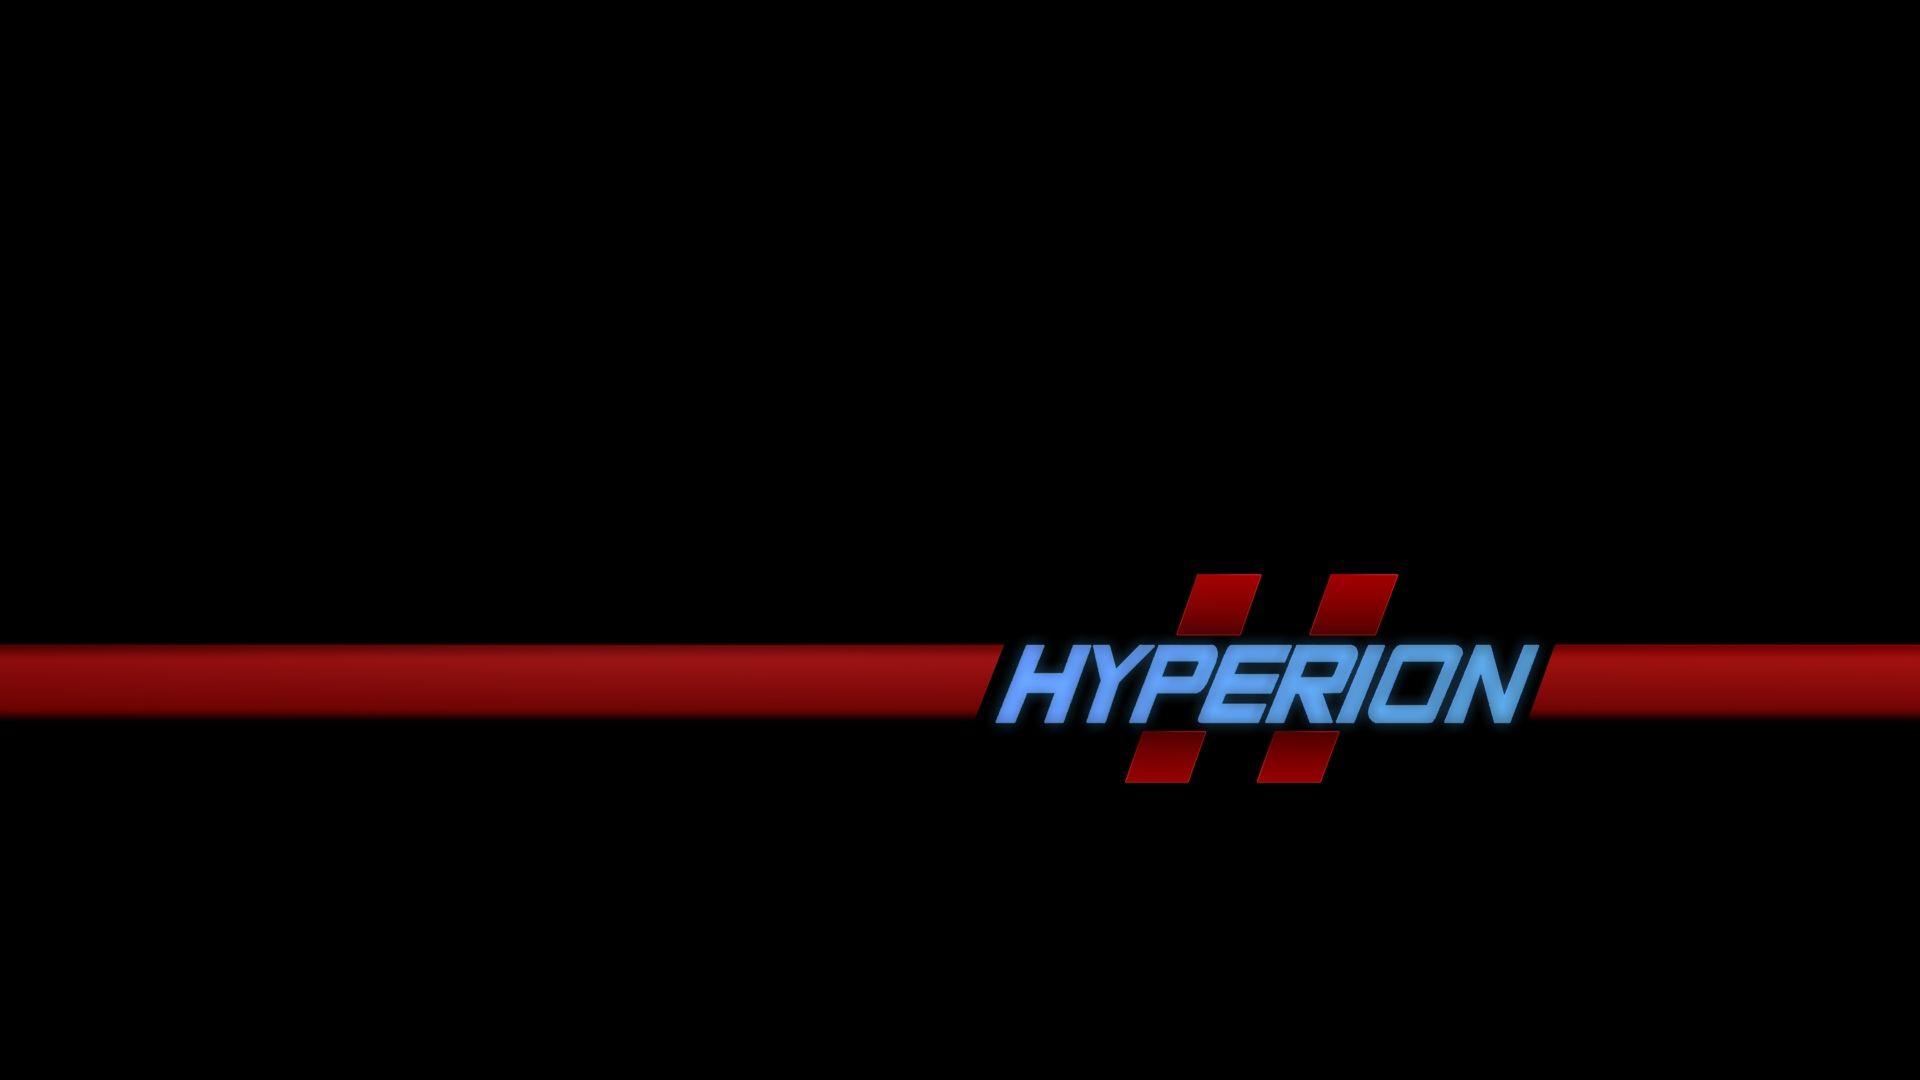 Hyperion Wallpaper 1